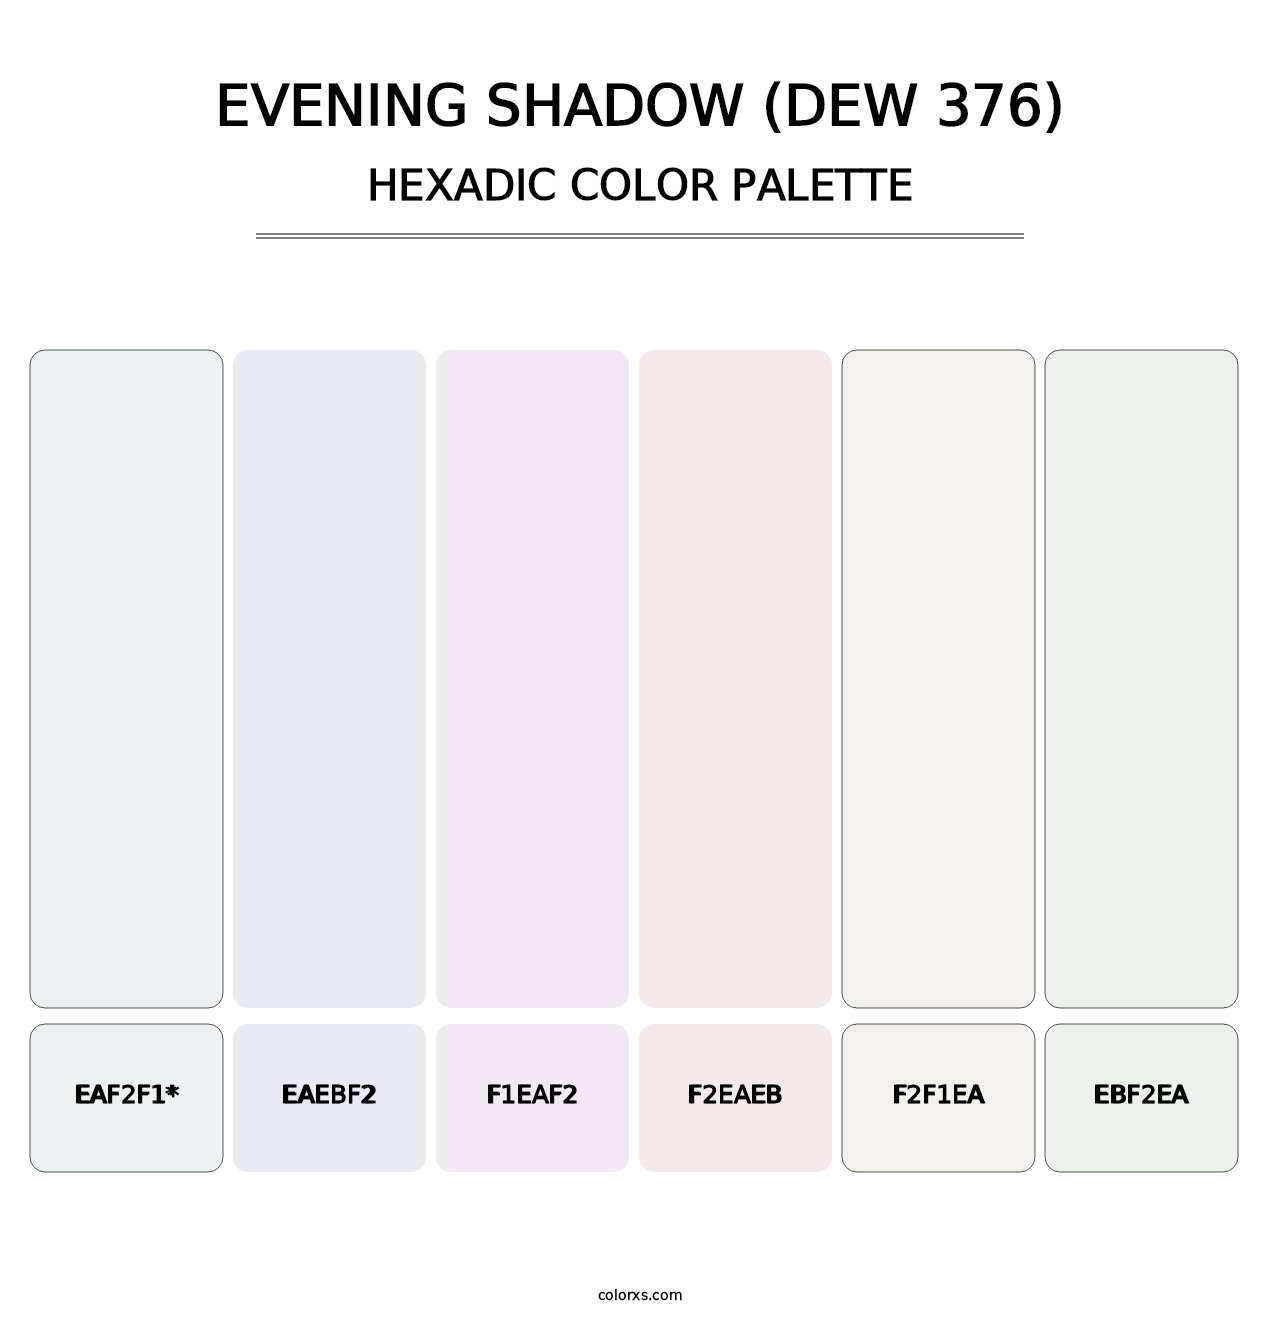 Evening Shadow (DEW 376) - Hexadic Color Palette